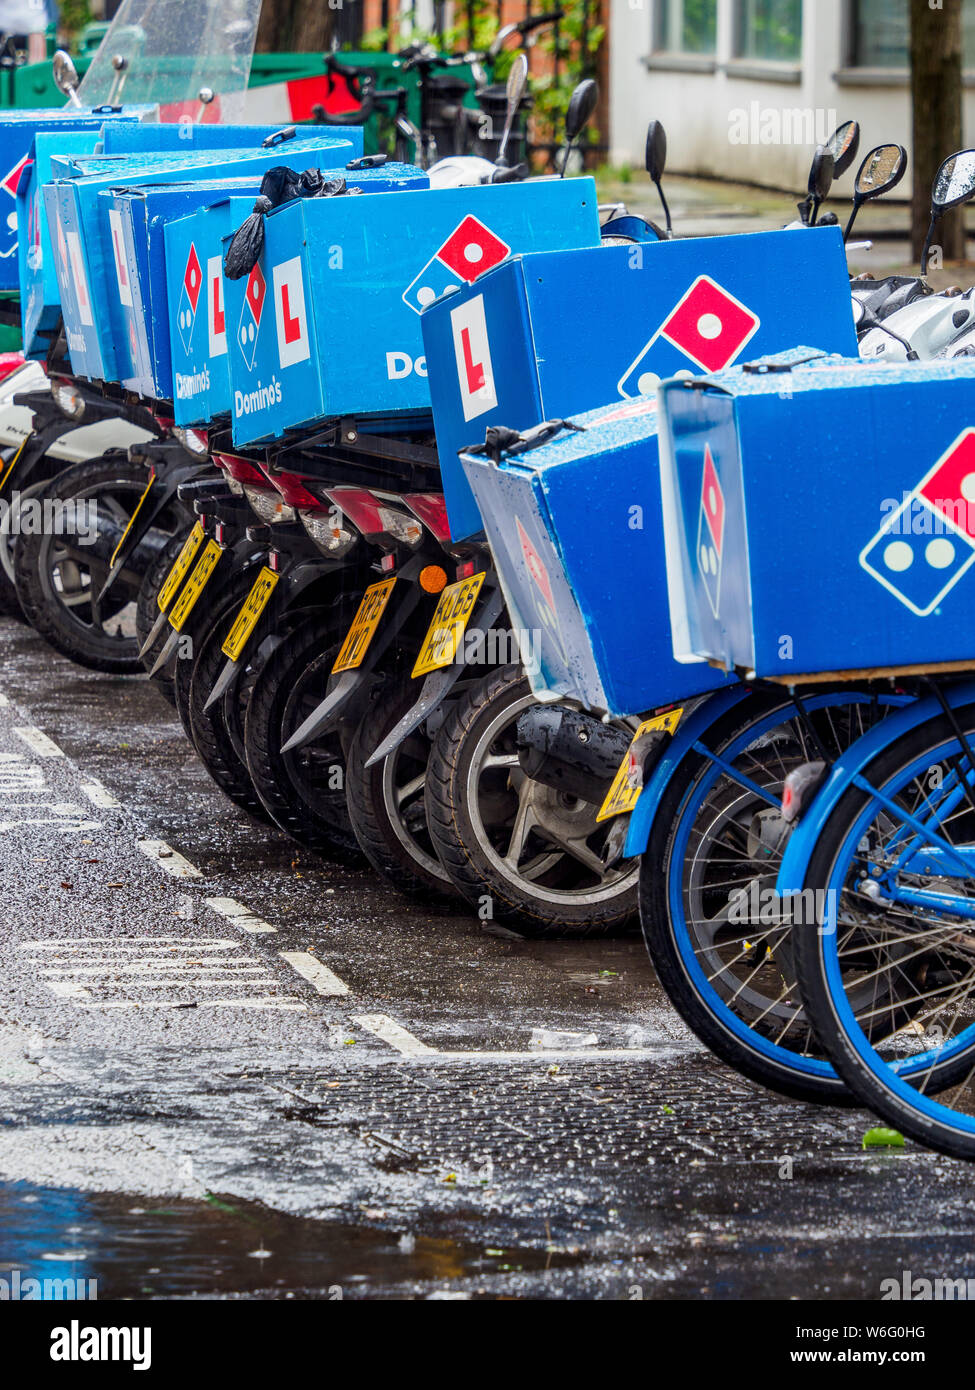 domino's pizza electric bike